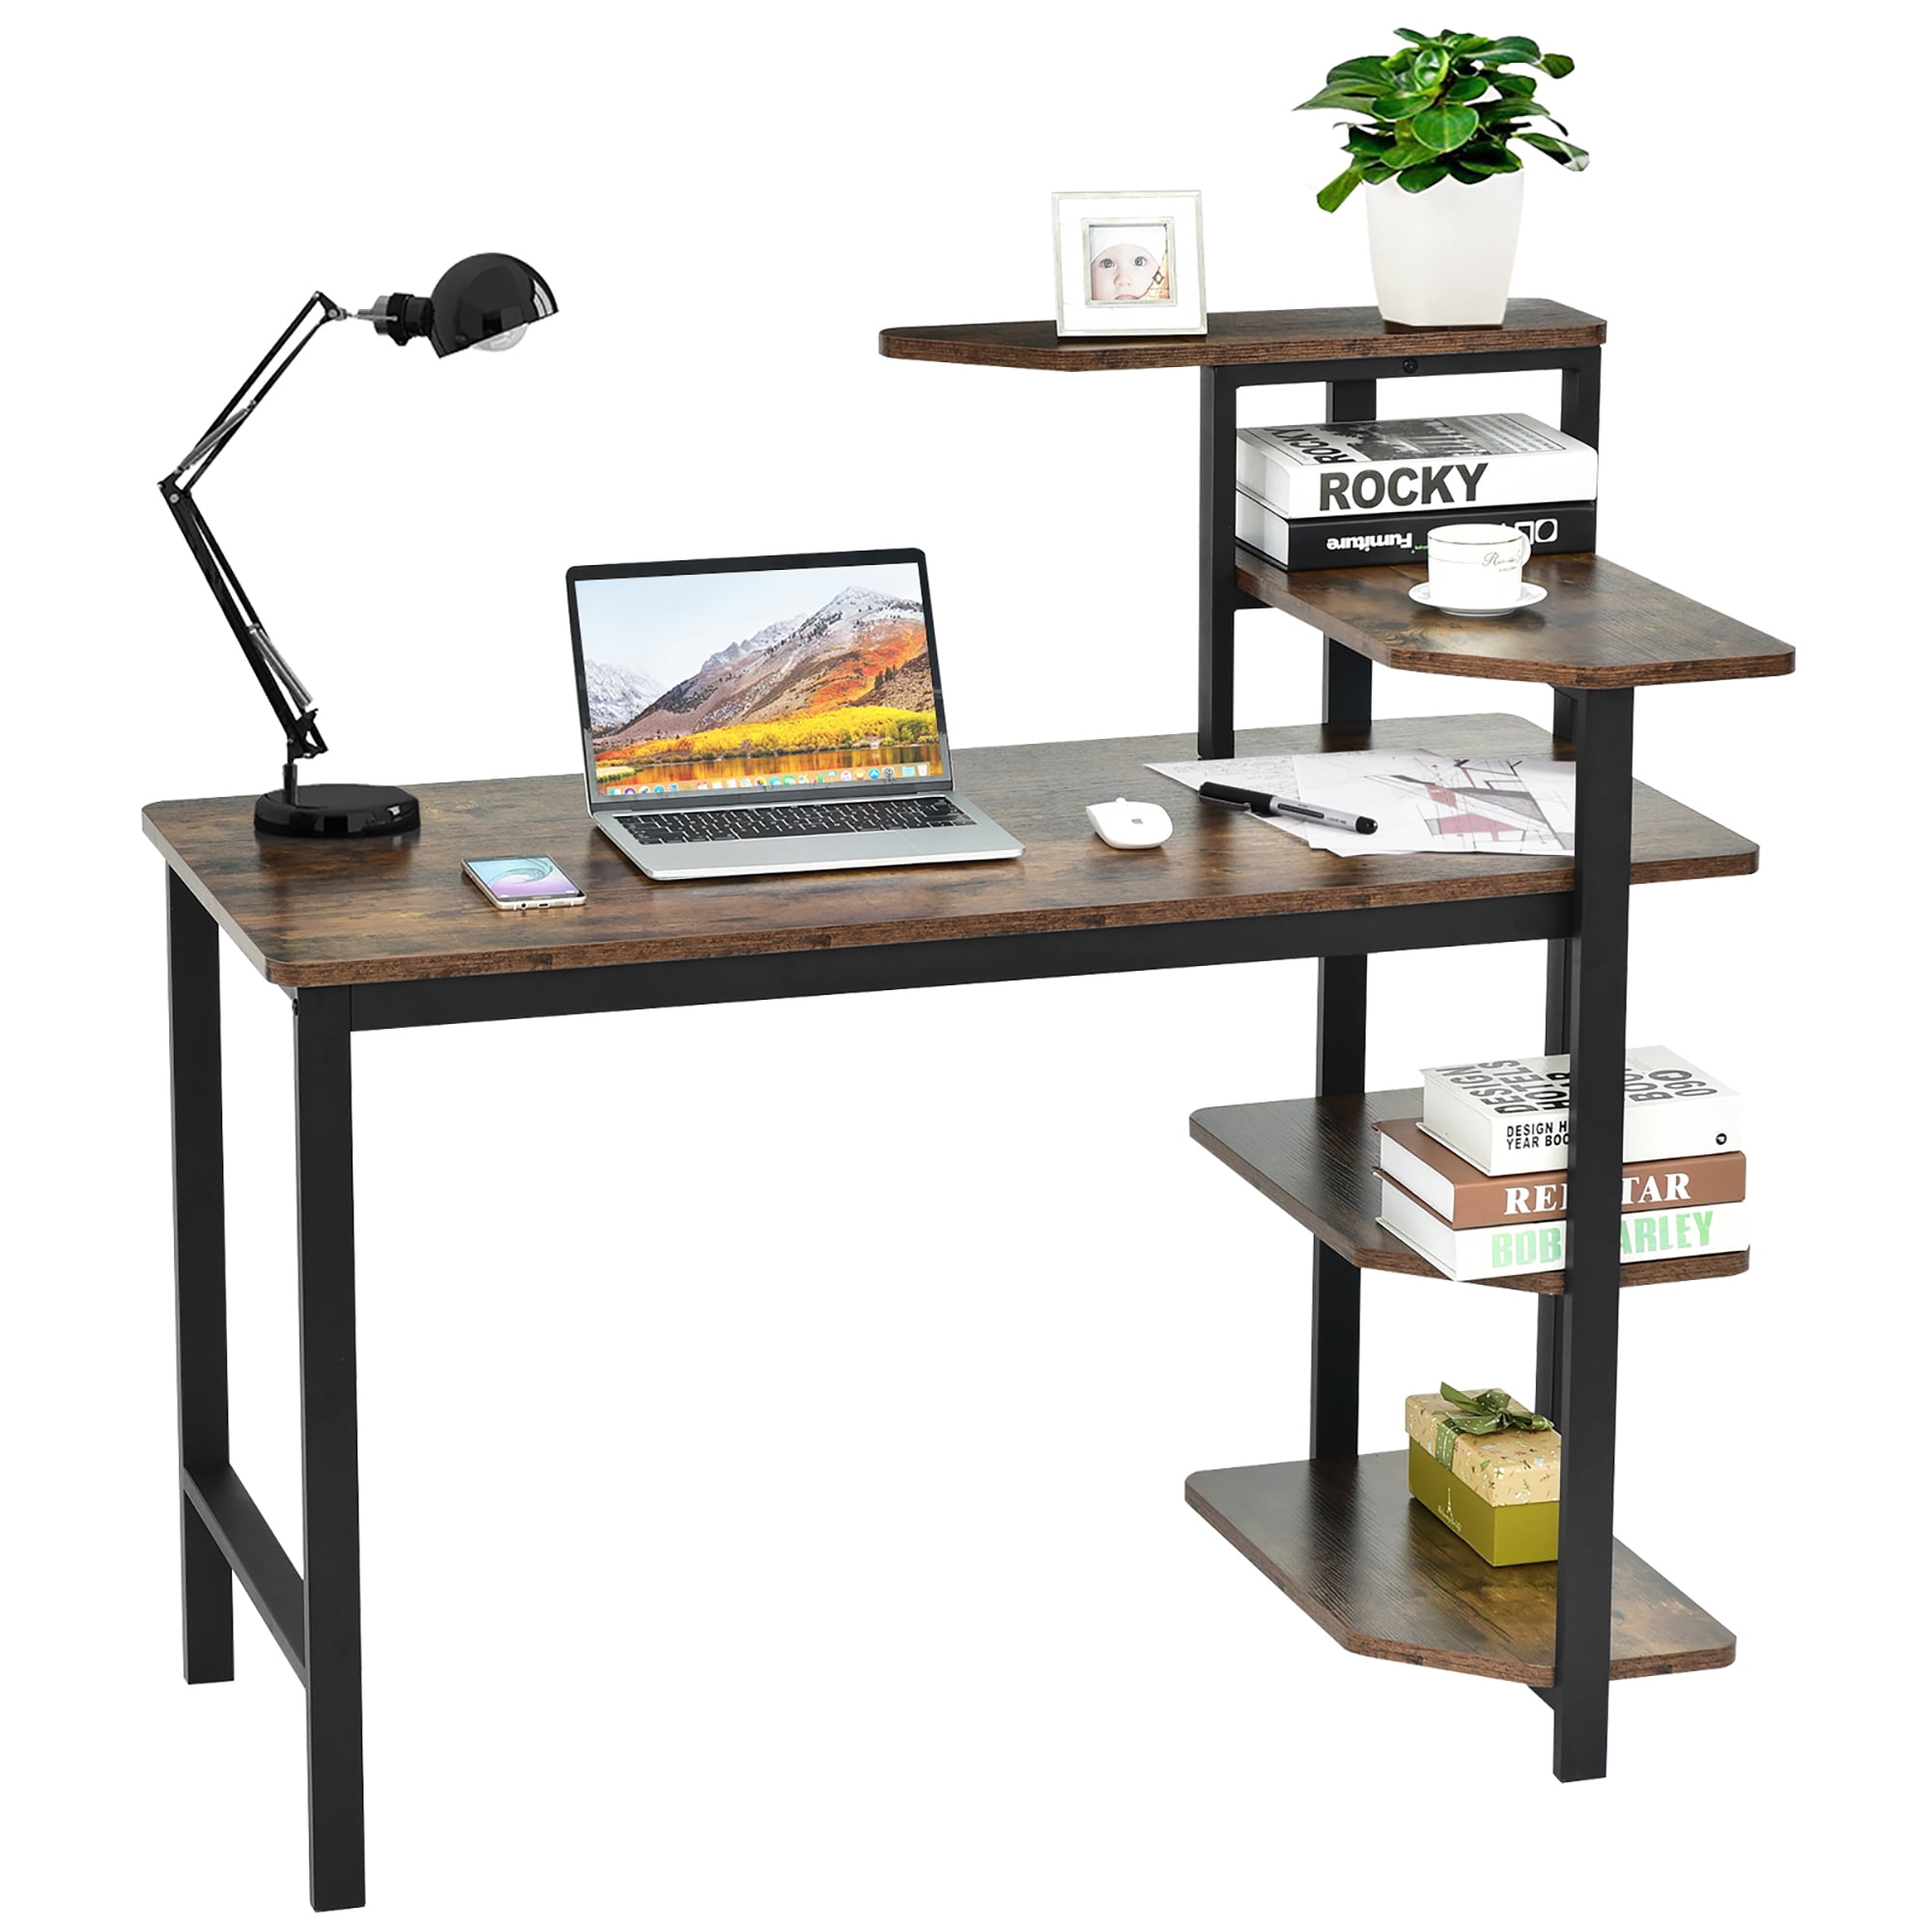 Details about   Computer Desk Table Workstation Home Office Student Dorm Laptop Study w/ Shelf 